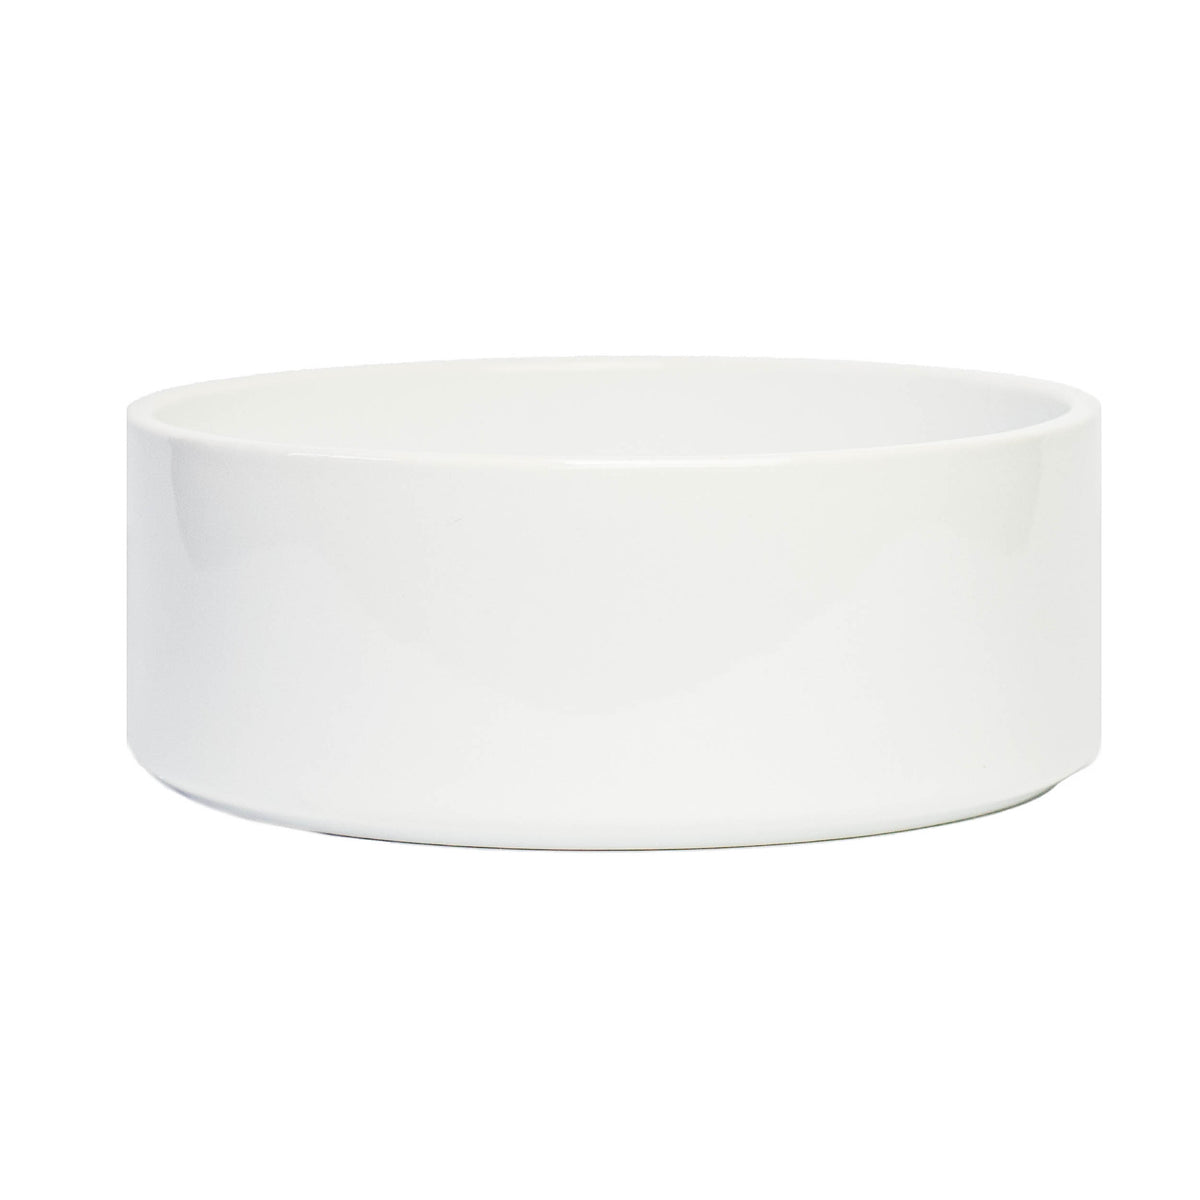 Personalised bowl for dogs / ceramic - 22oz 650ml (design 3)